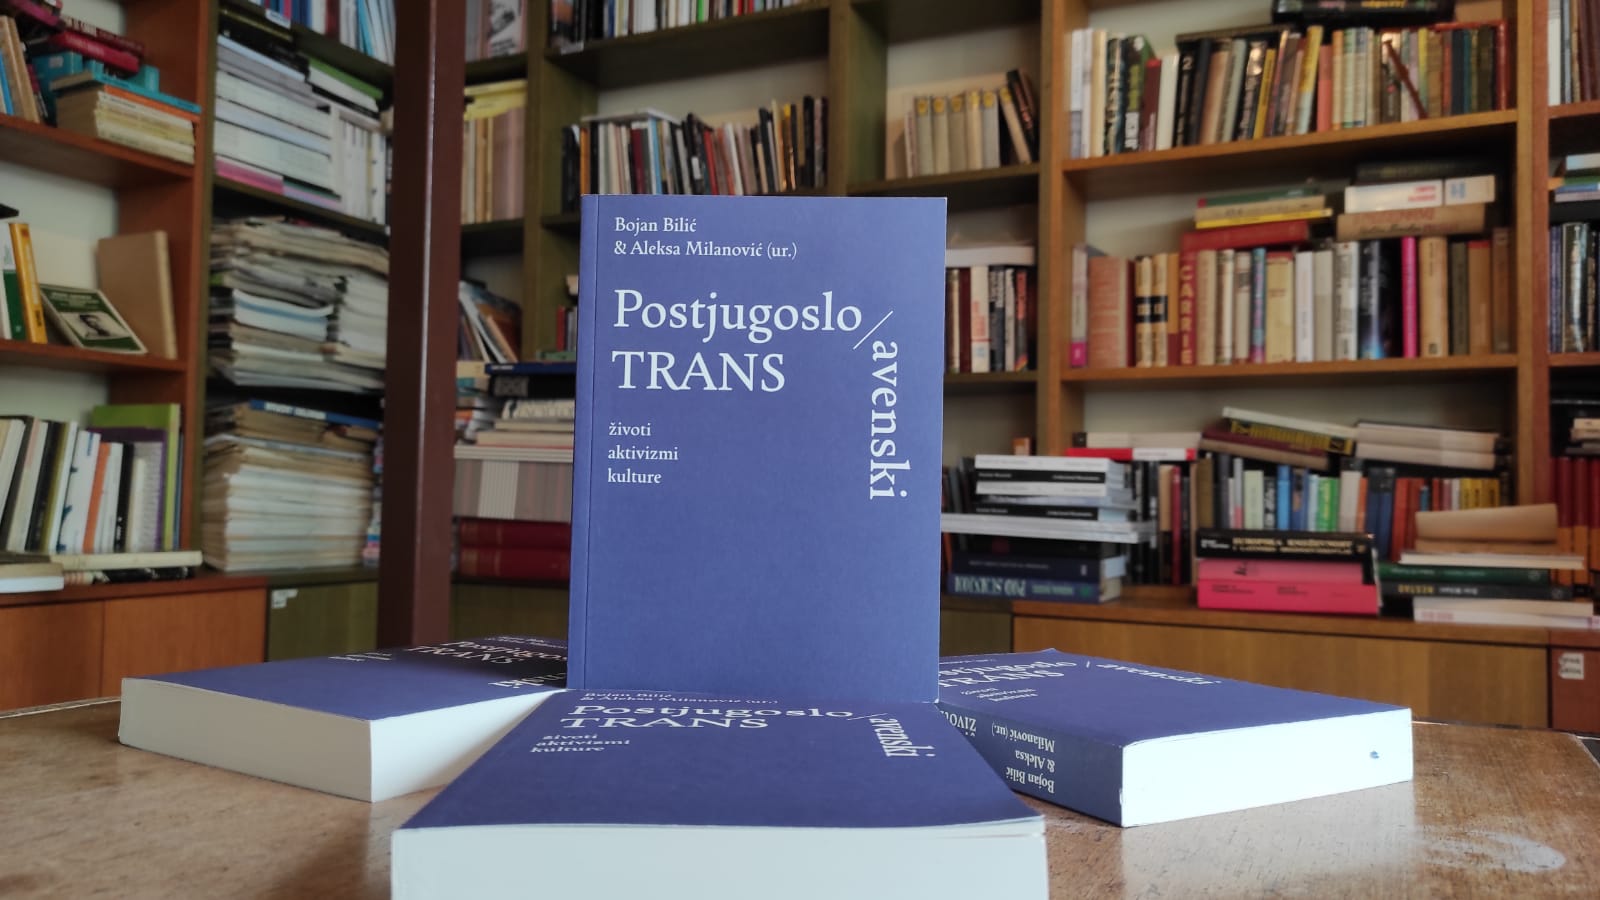 Promocija knjige “Postjugoslo/avenski TRANS: Životi Aktivizmi Kulture”